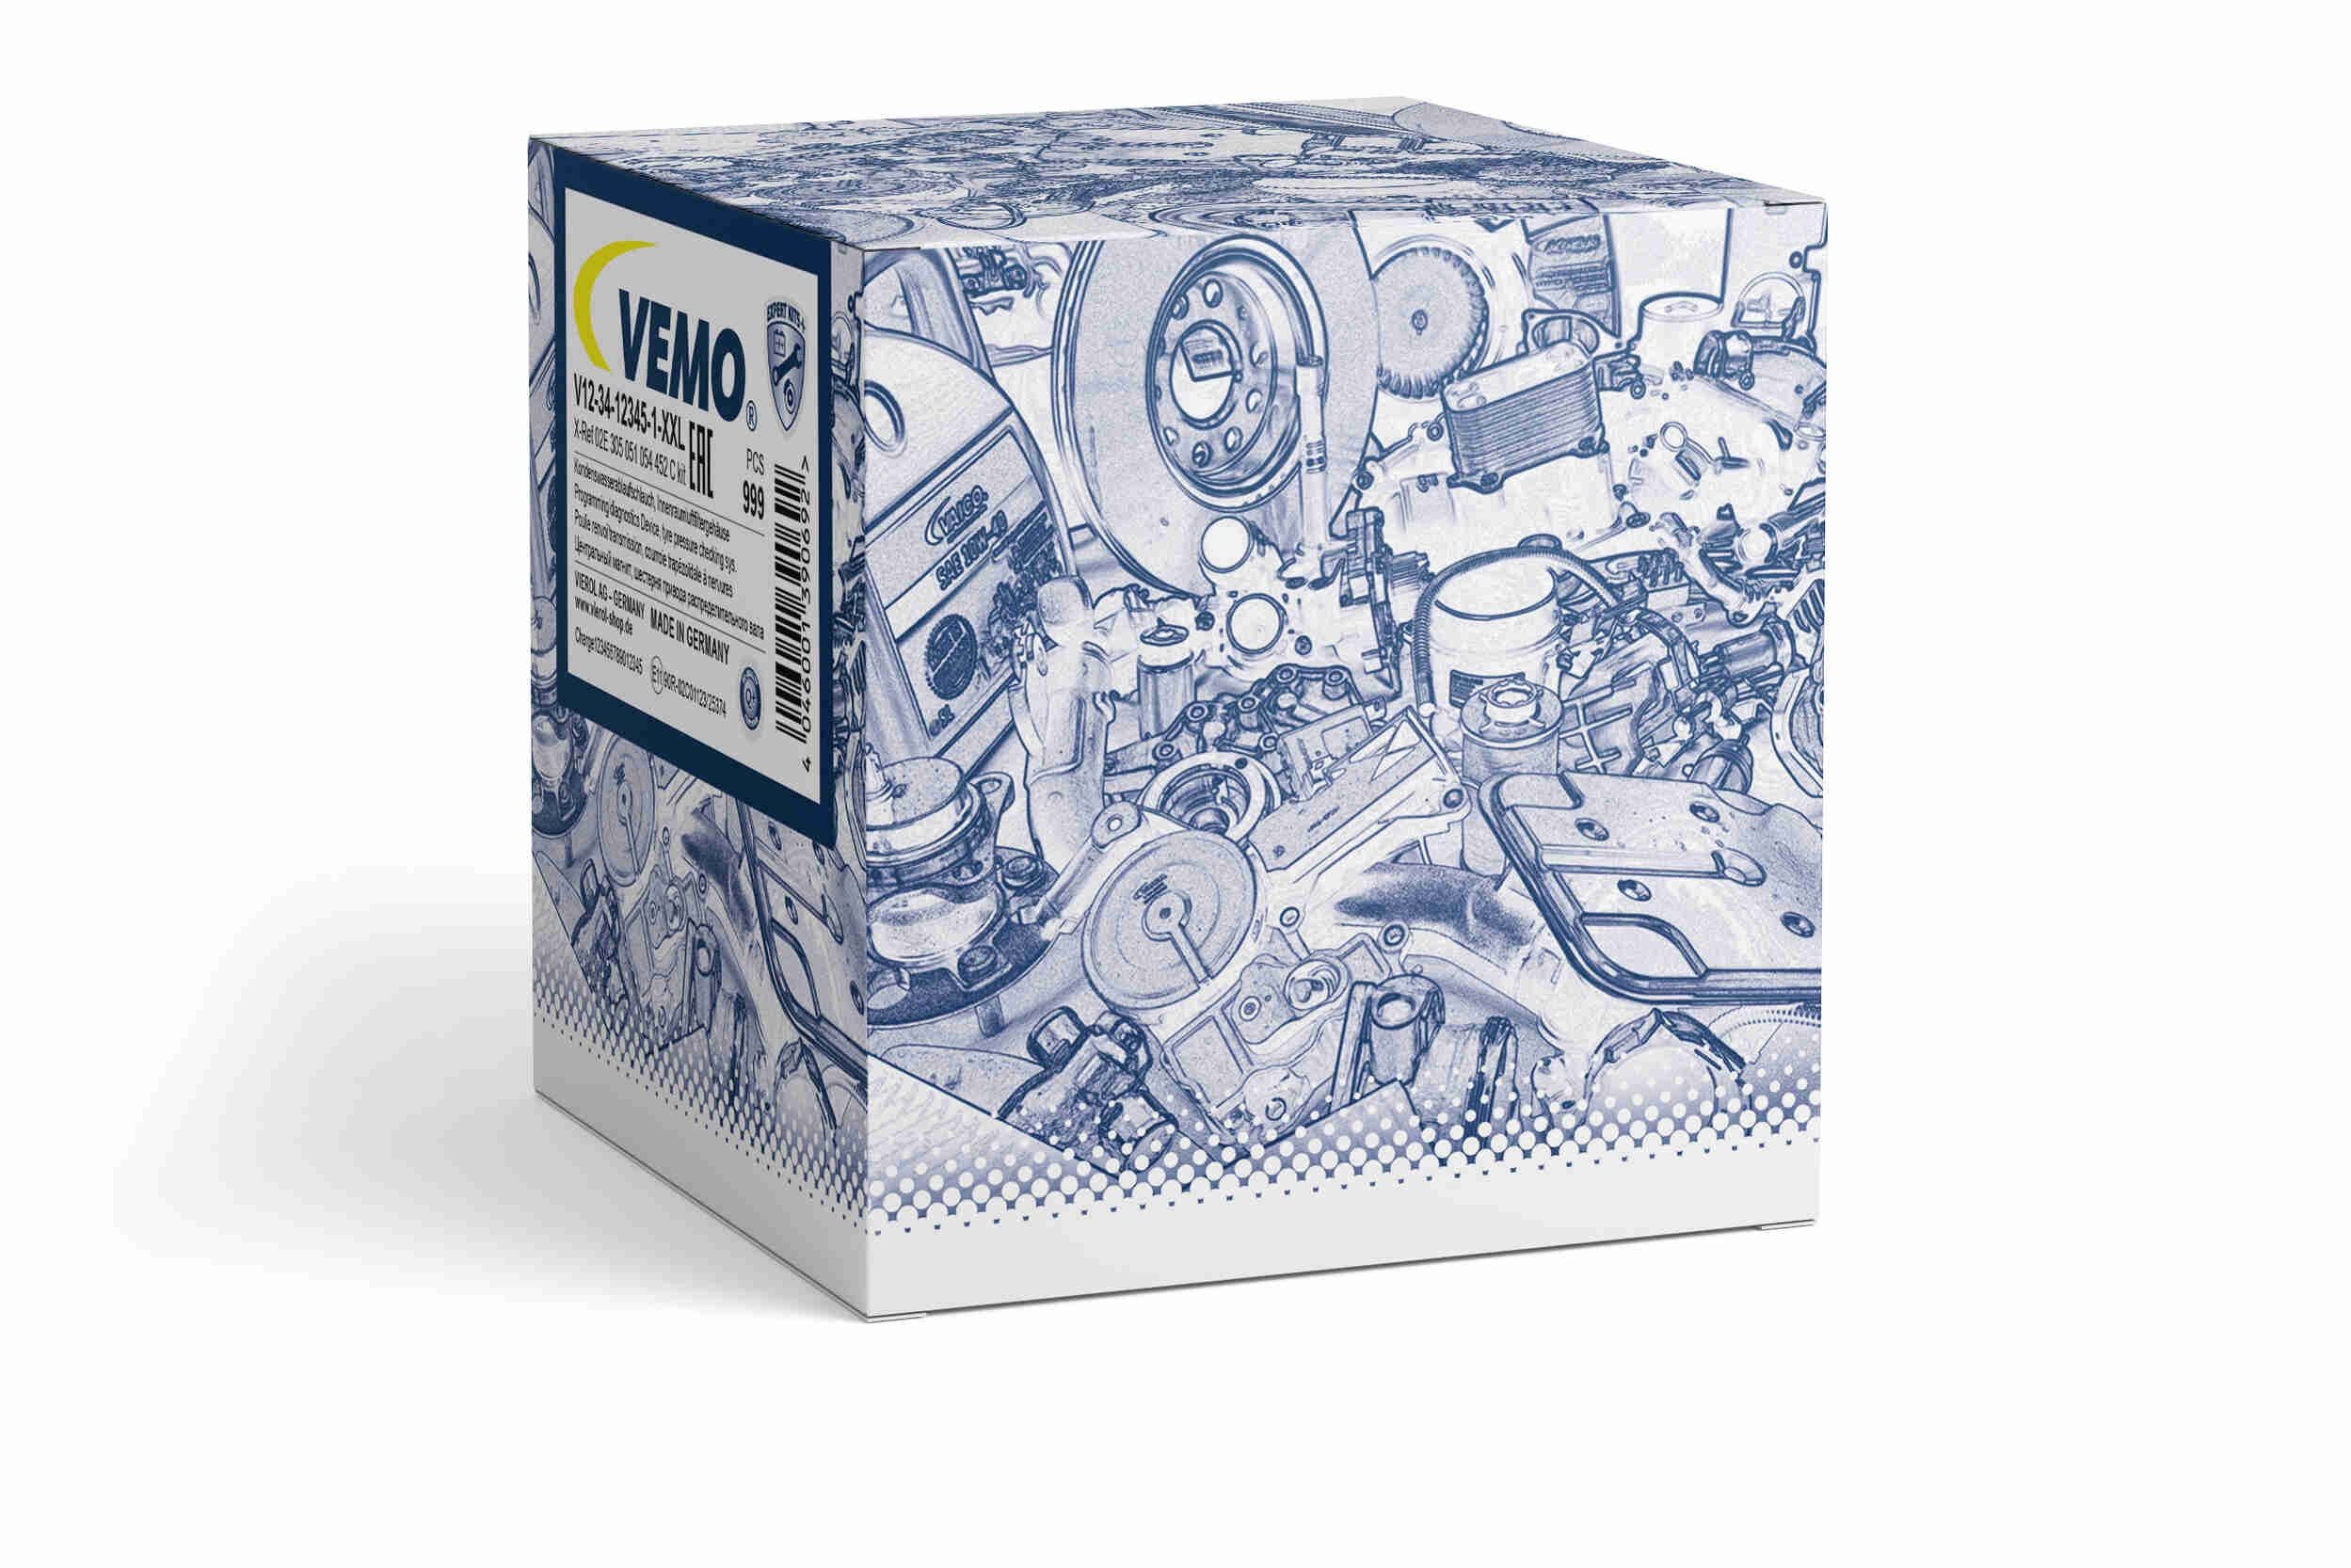 VEMO V30-72-0812 Fuel rail pressure sensor Q+, original equipment manufacturer quality MADE IN GERMANY